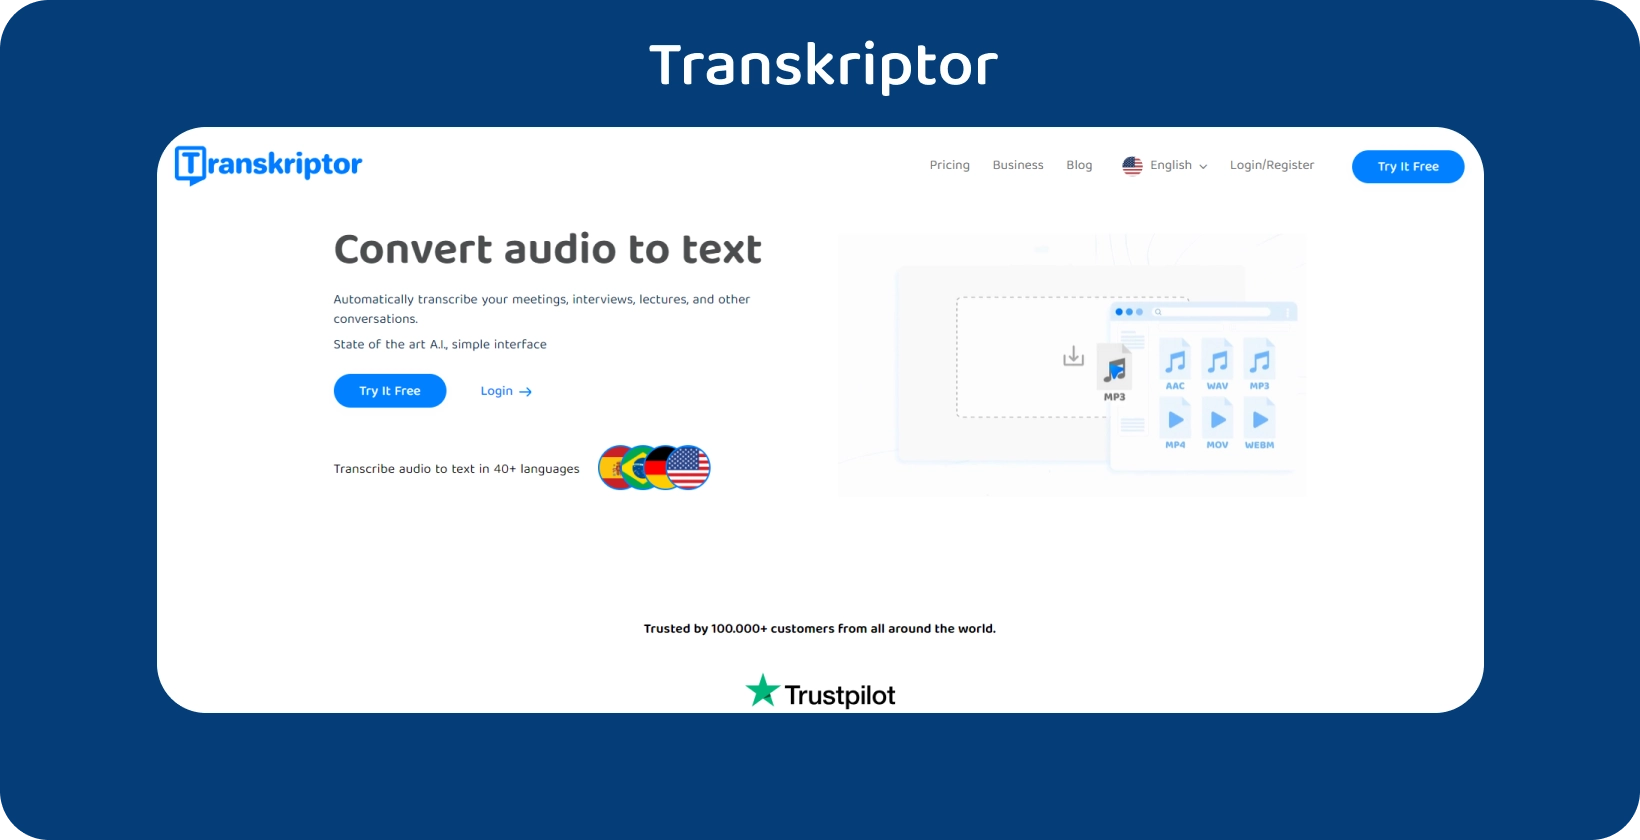 Transkriptor الصفحة الرئيسية مع عبارة واضحة تحث المستخدم على اتخاذ إجراء ، وتقدم خدمات النسخ الصوتي إلى نص.